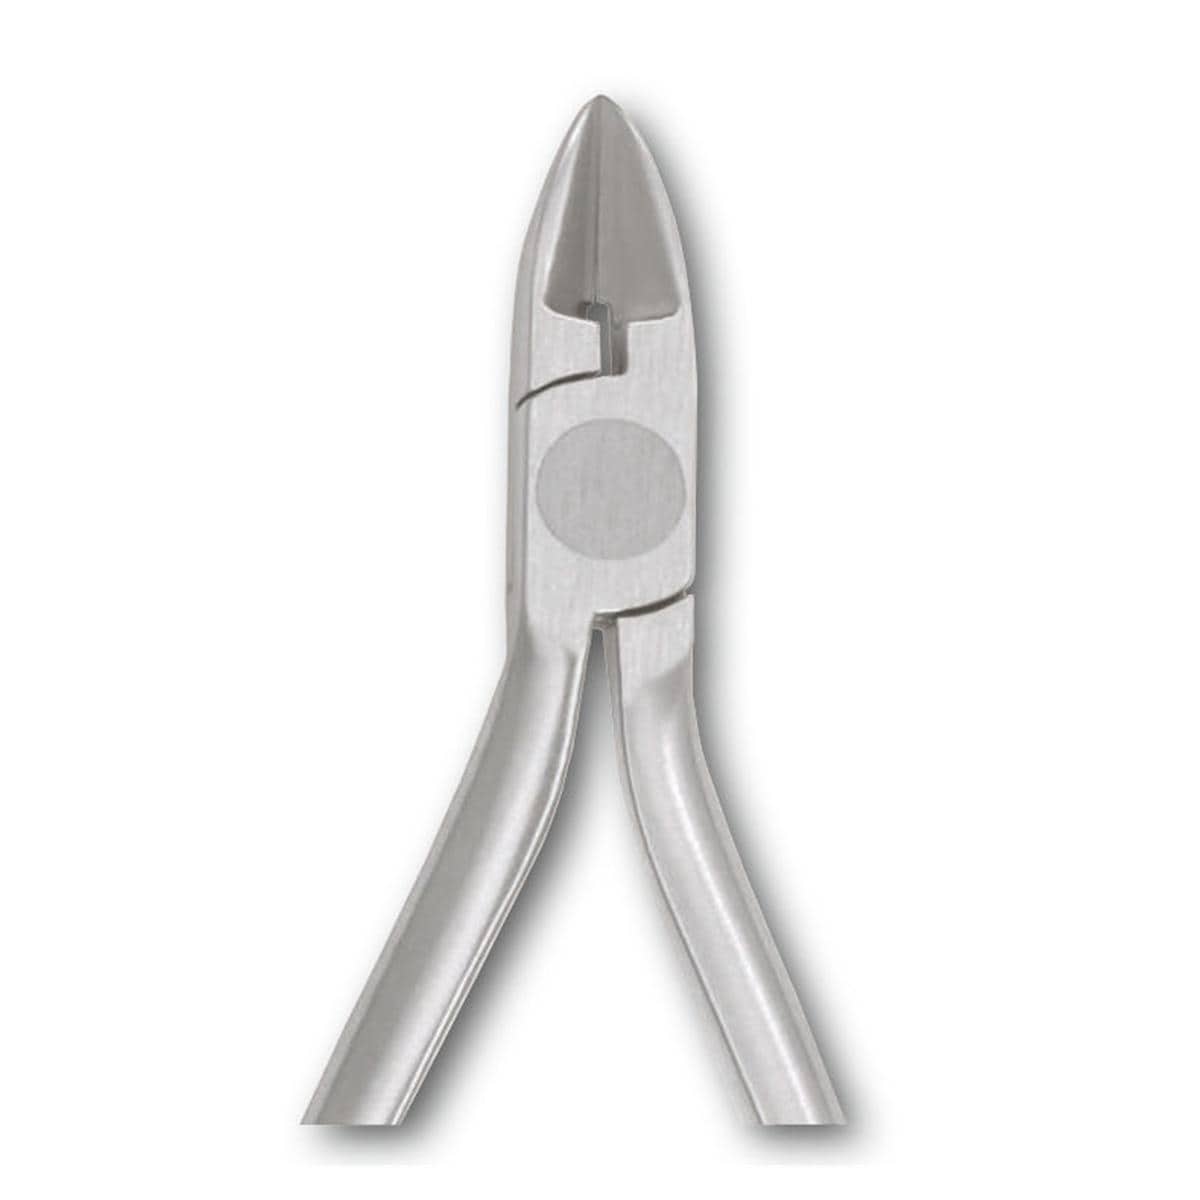 Pince coupante - Modle 678-107, Micro Mini, Pin & Ligature Cutter